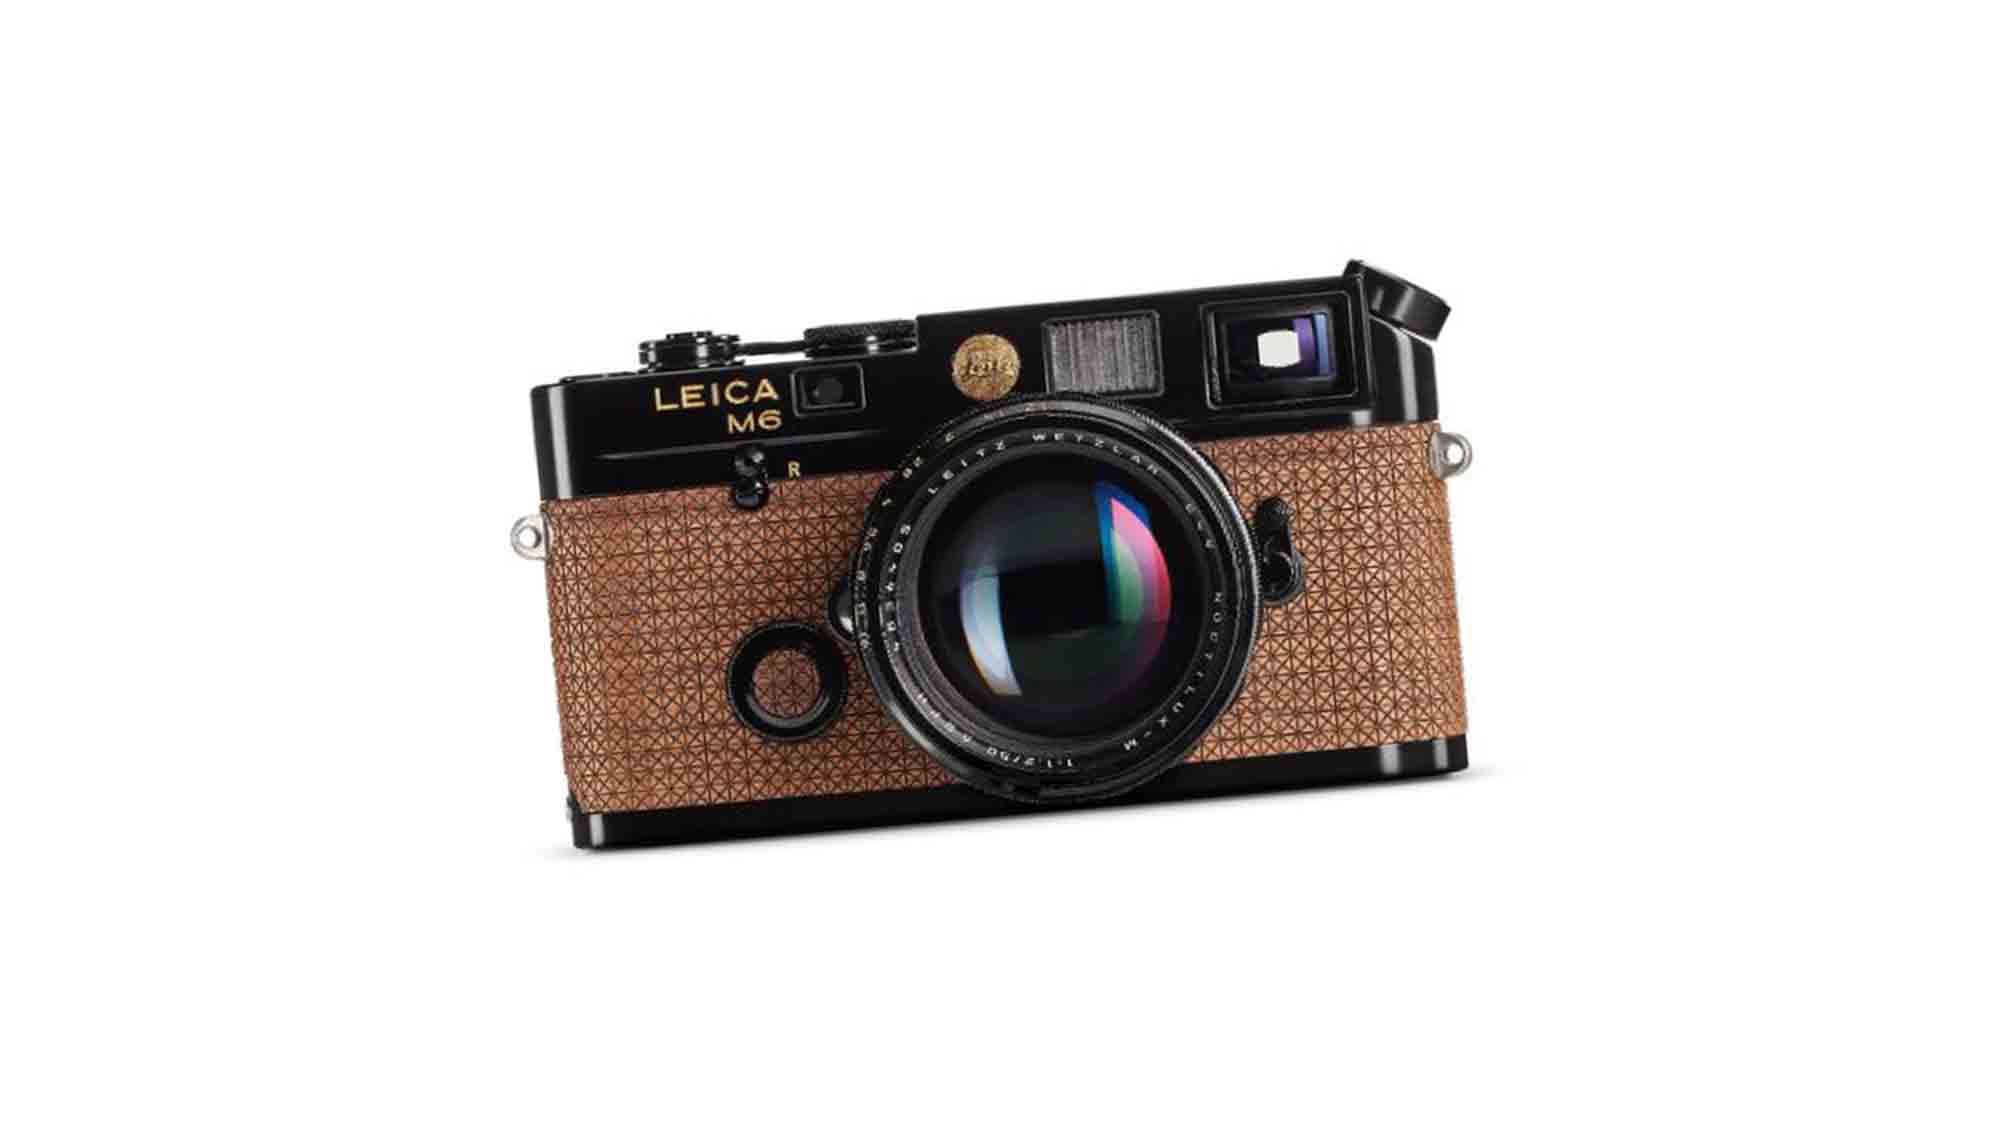 Digitalkameras Gütersloh, neu: Leica M6 Set »Leitz Auction«, schwarz glänzend lackiert